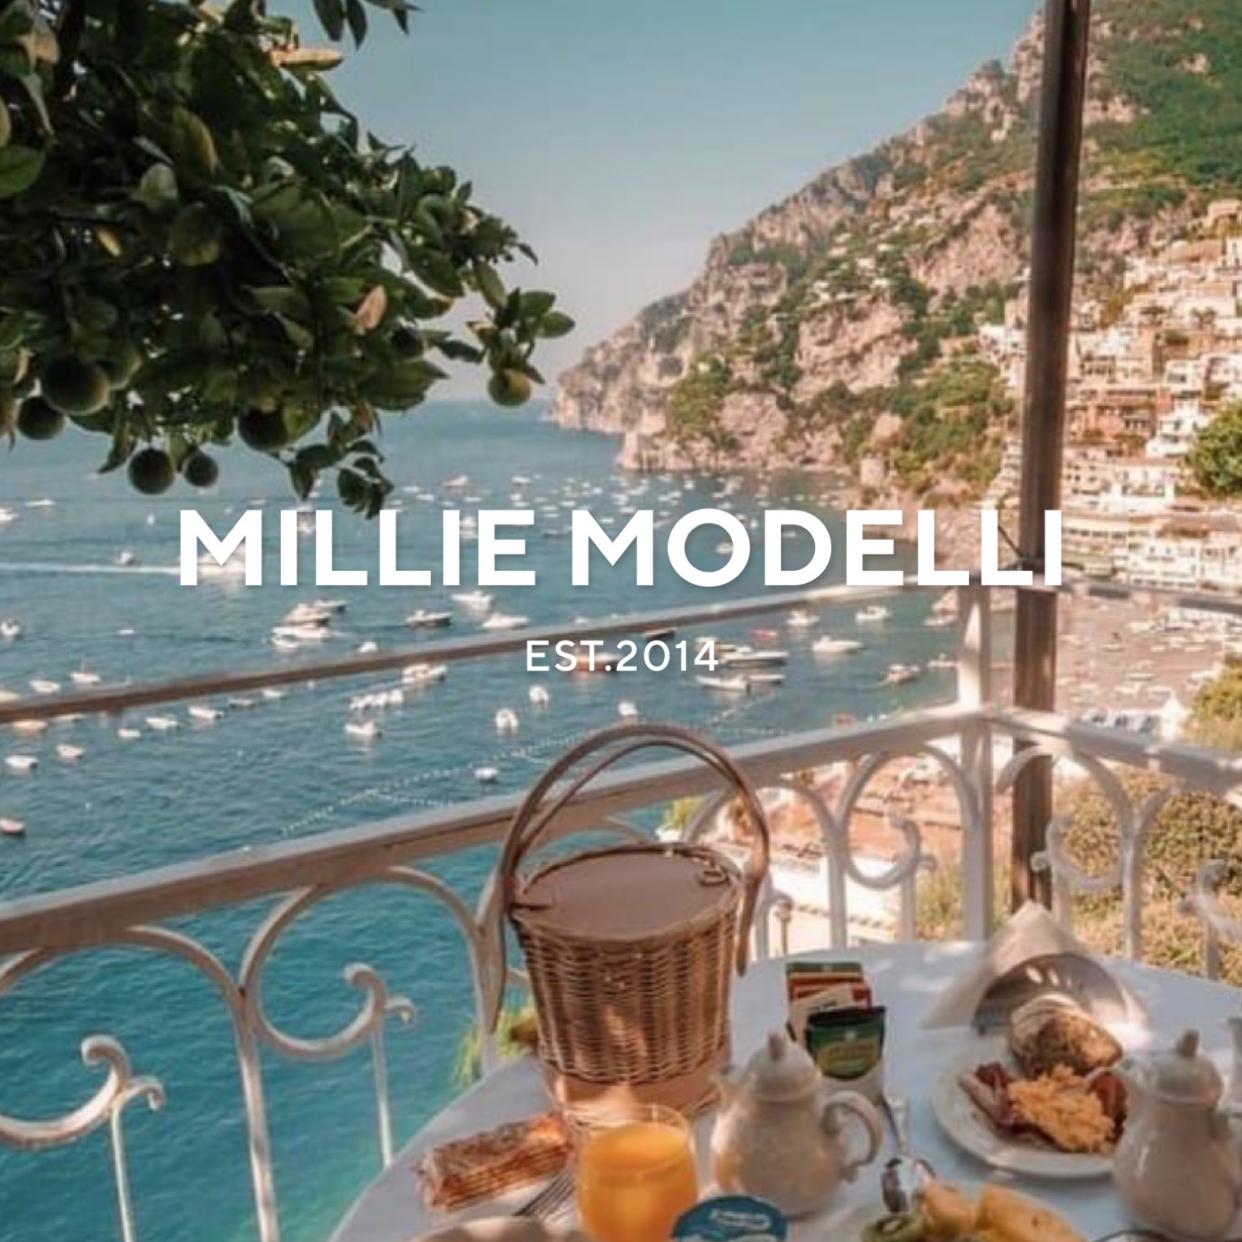 Millie Modelli's images